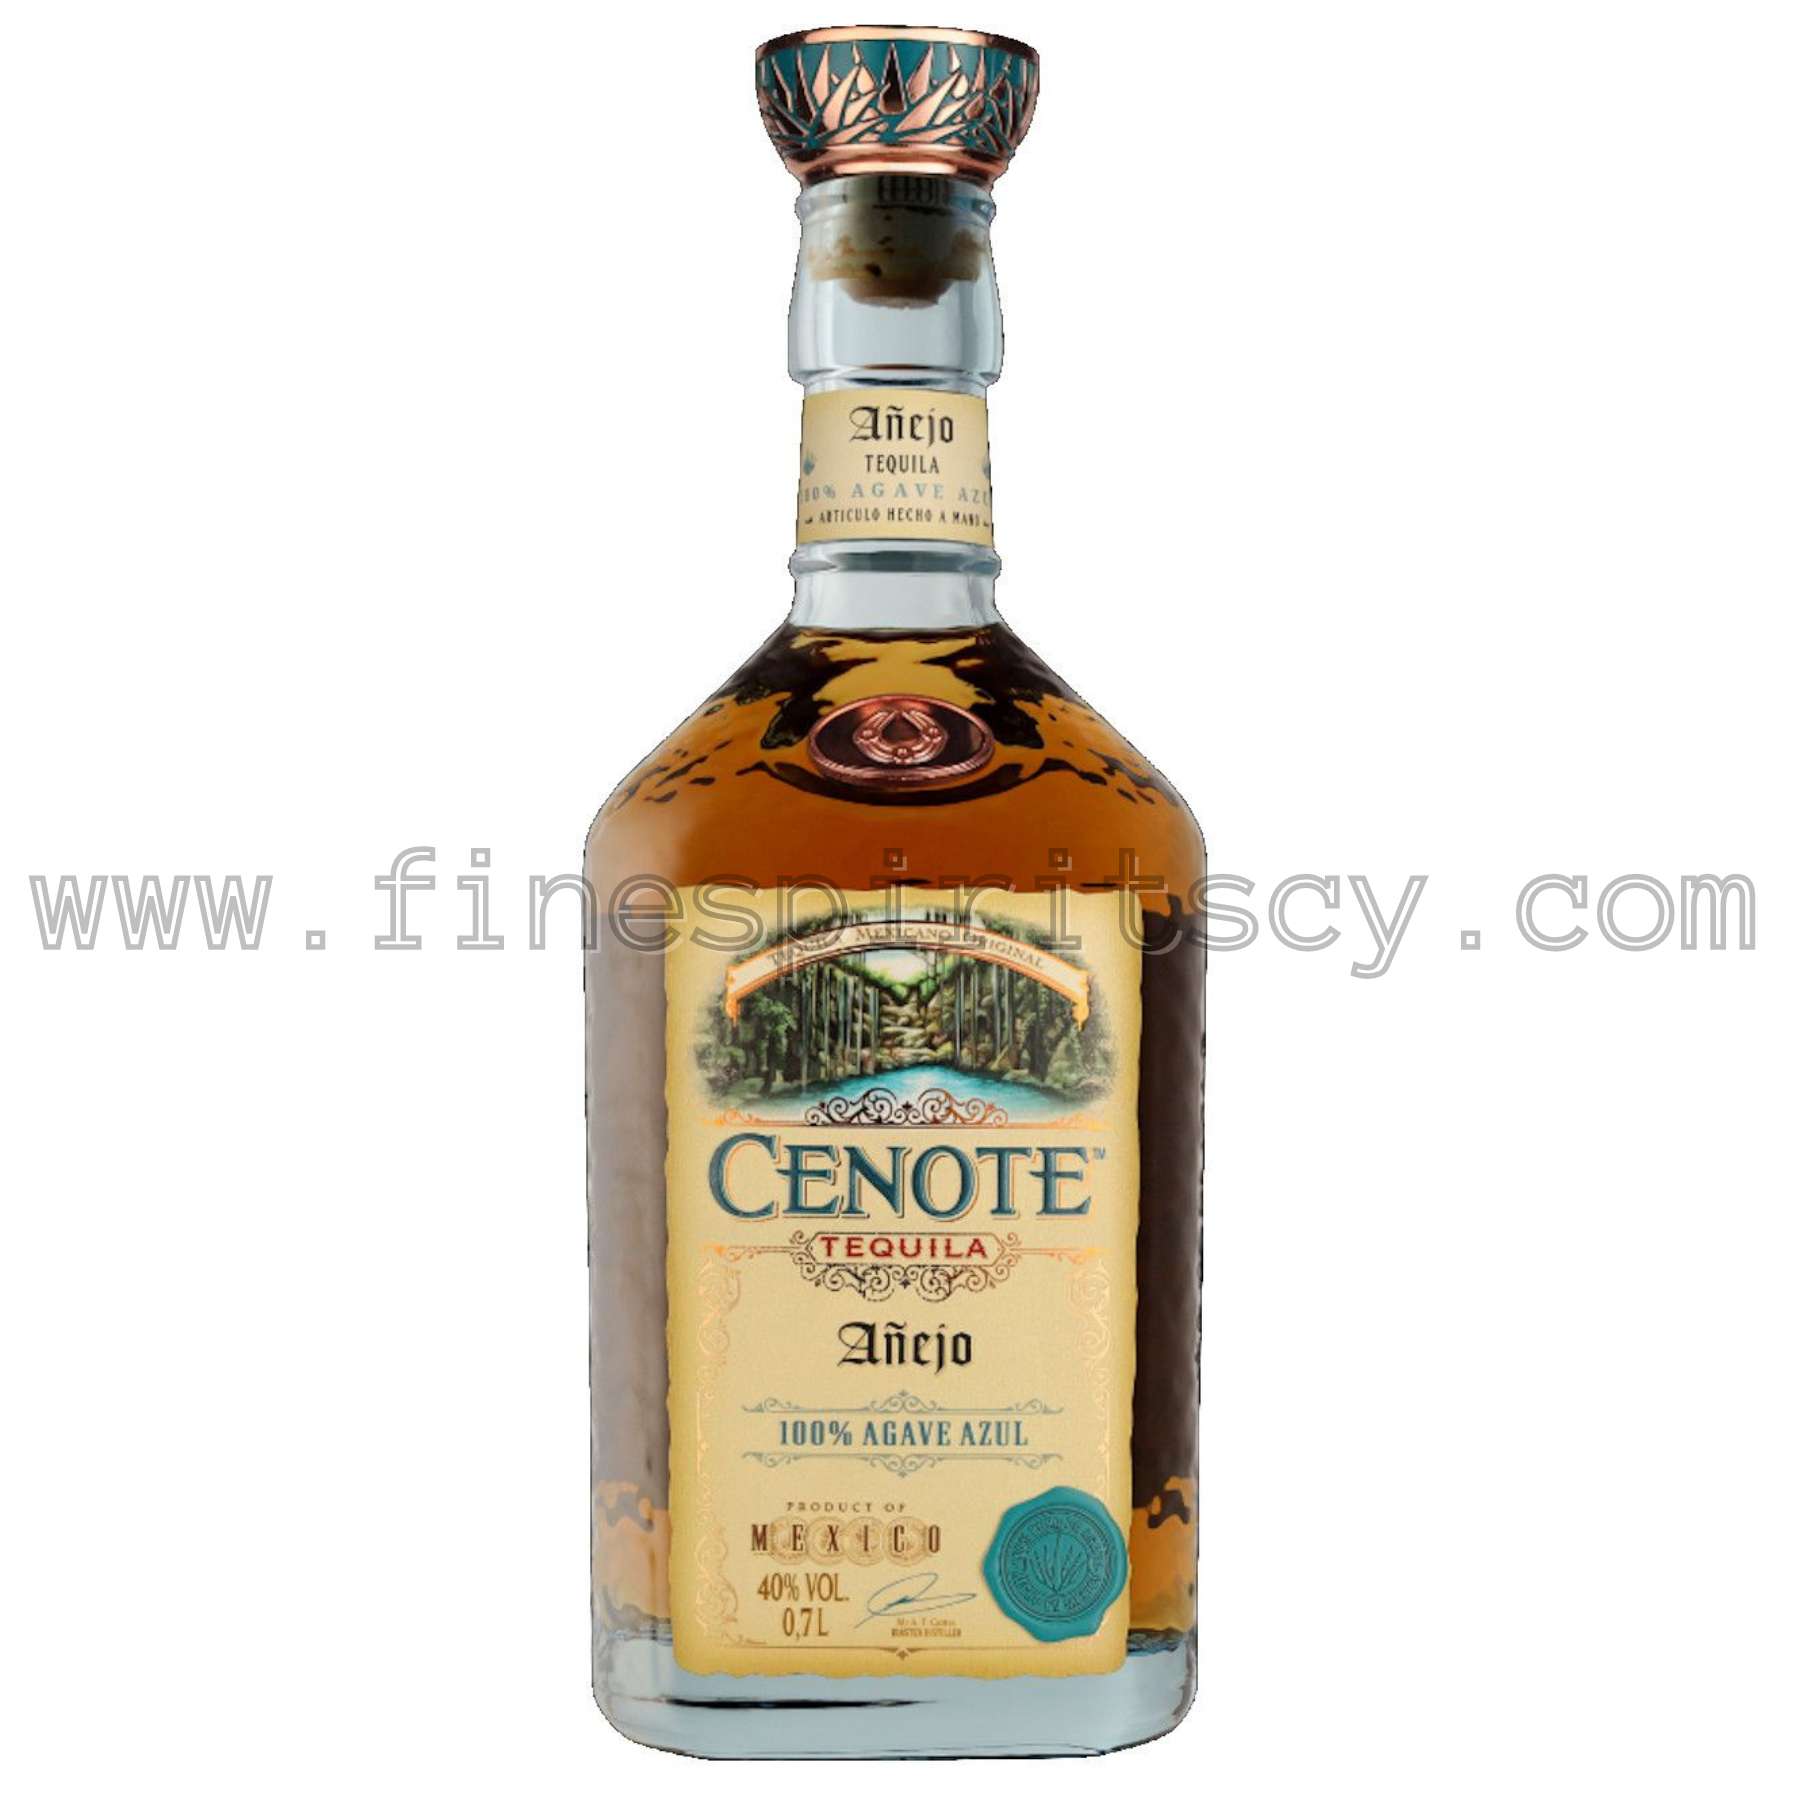 Clase Azul Gold Tequila 0,7L (40% Vol.) - Clase Azul - Tequila